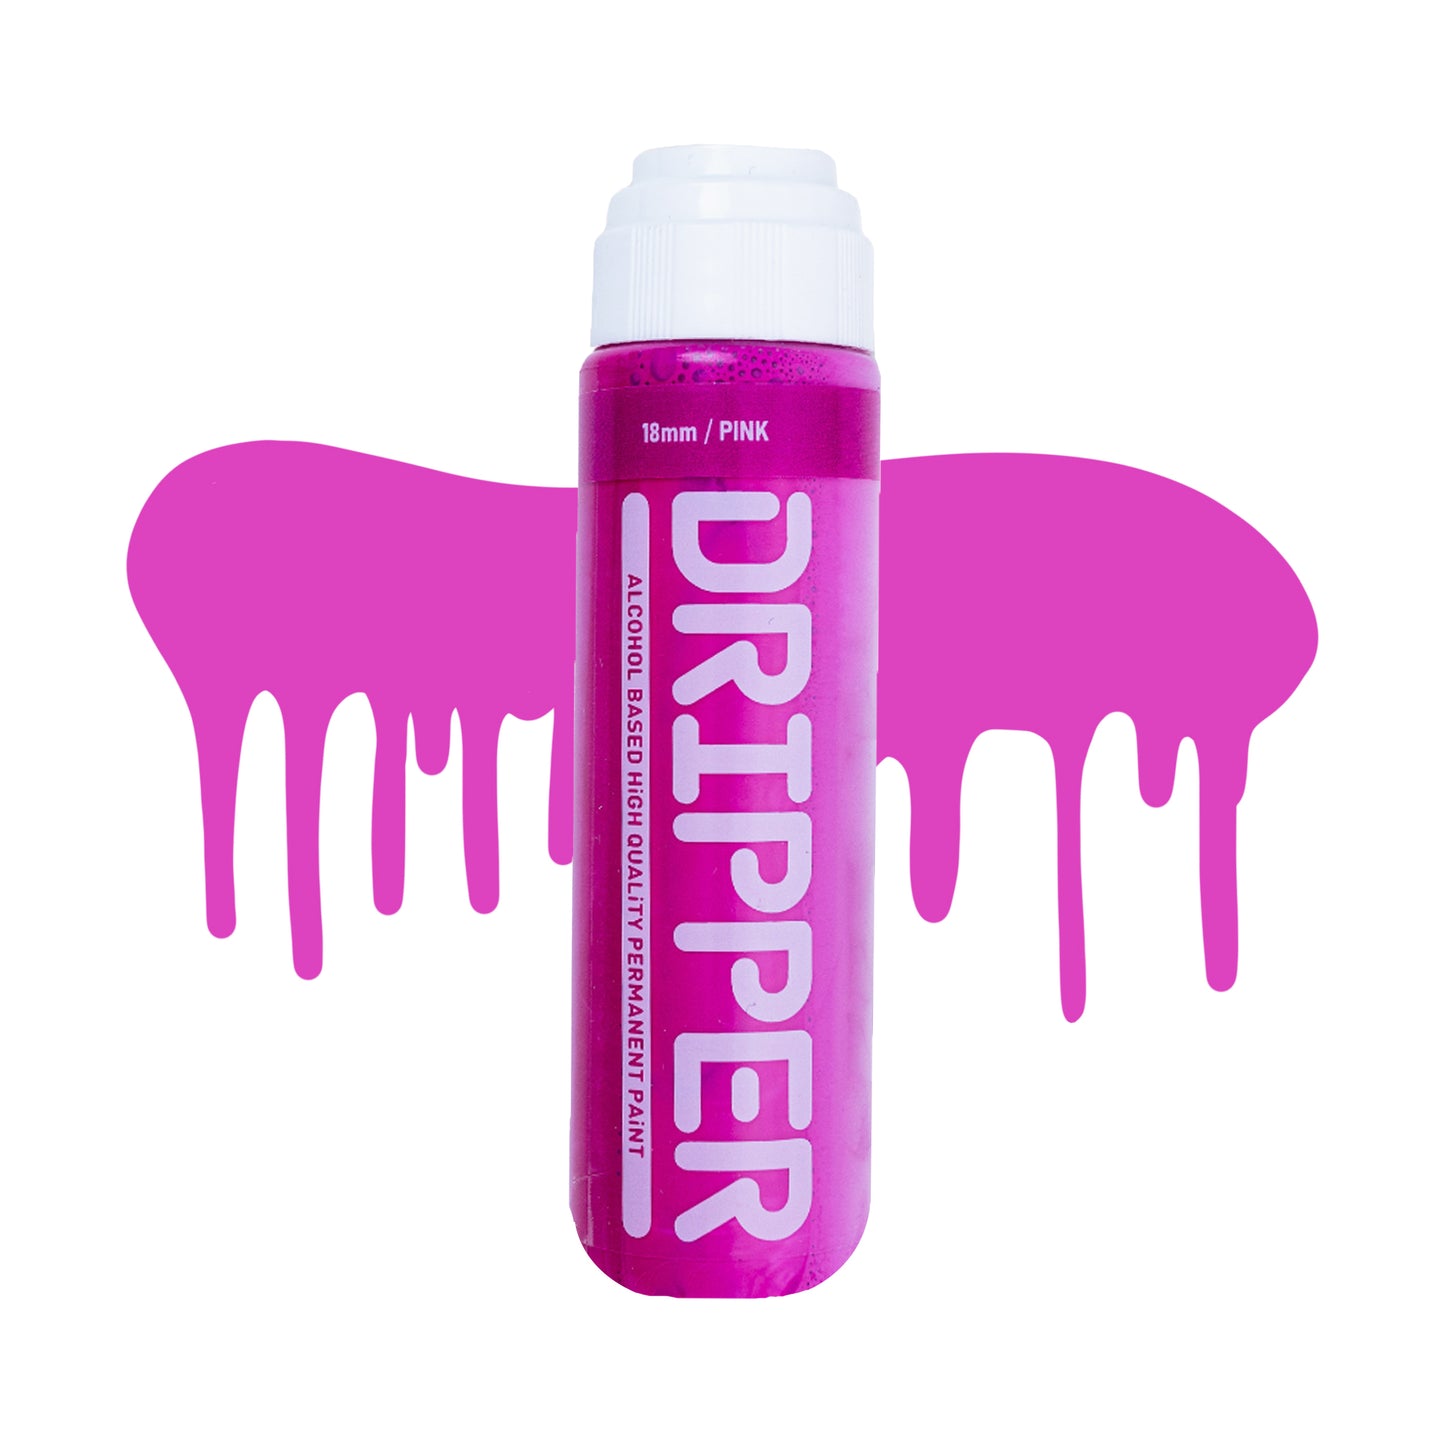 Dope Paint, Graffiti Squeeze Dripper Mop Marker in pink.